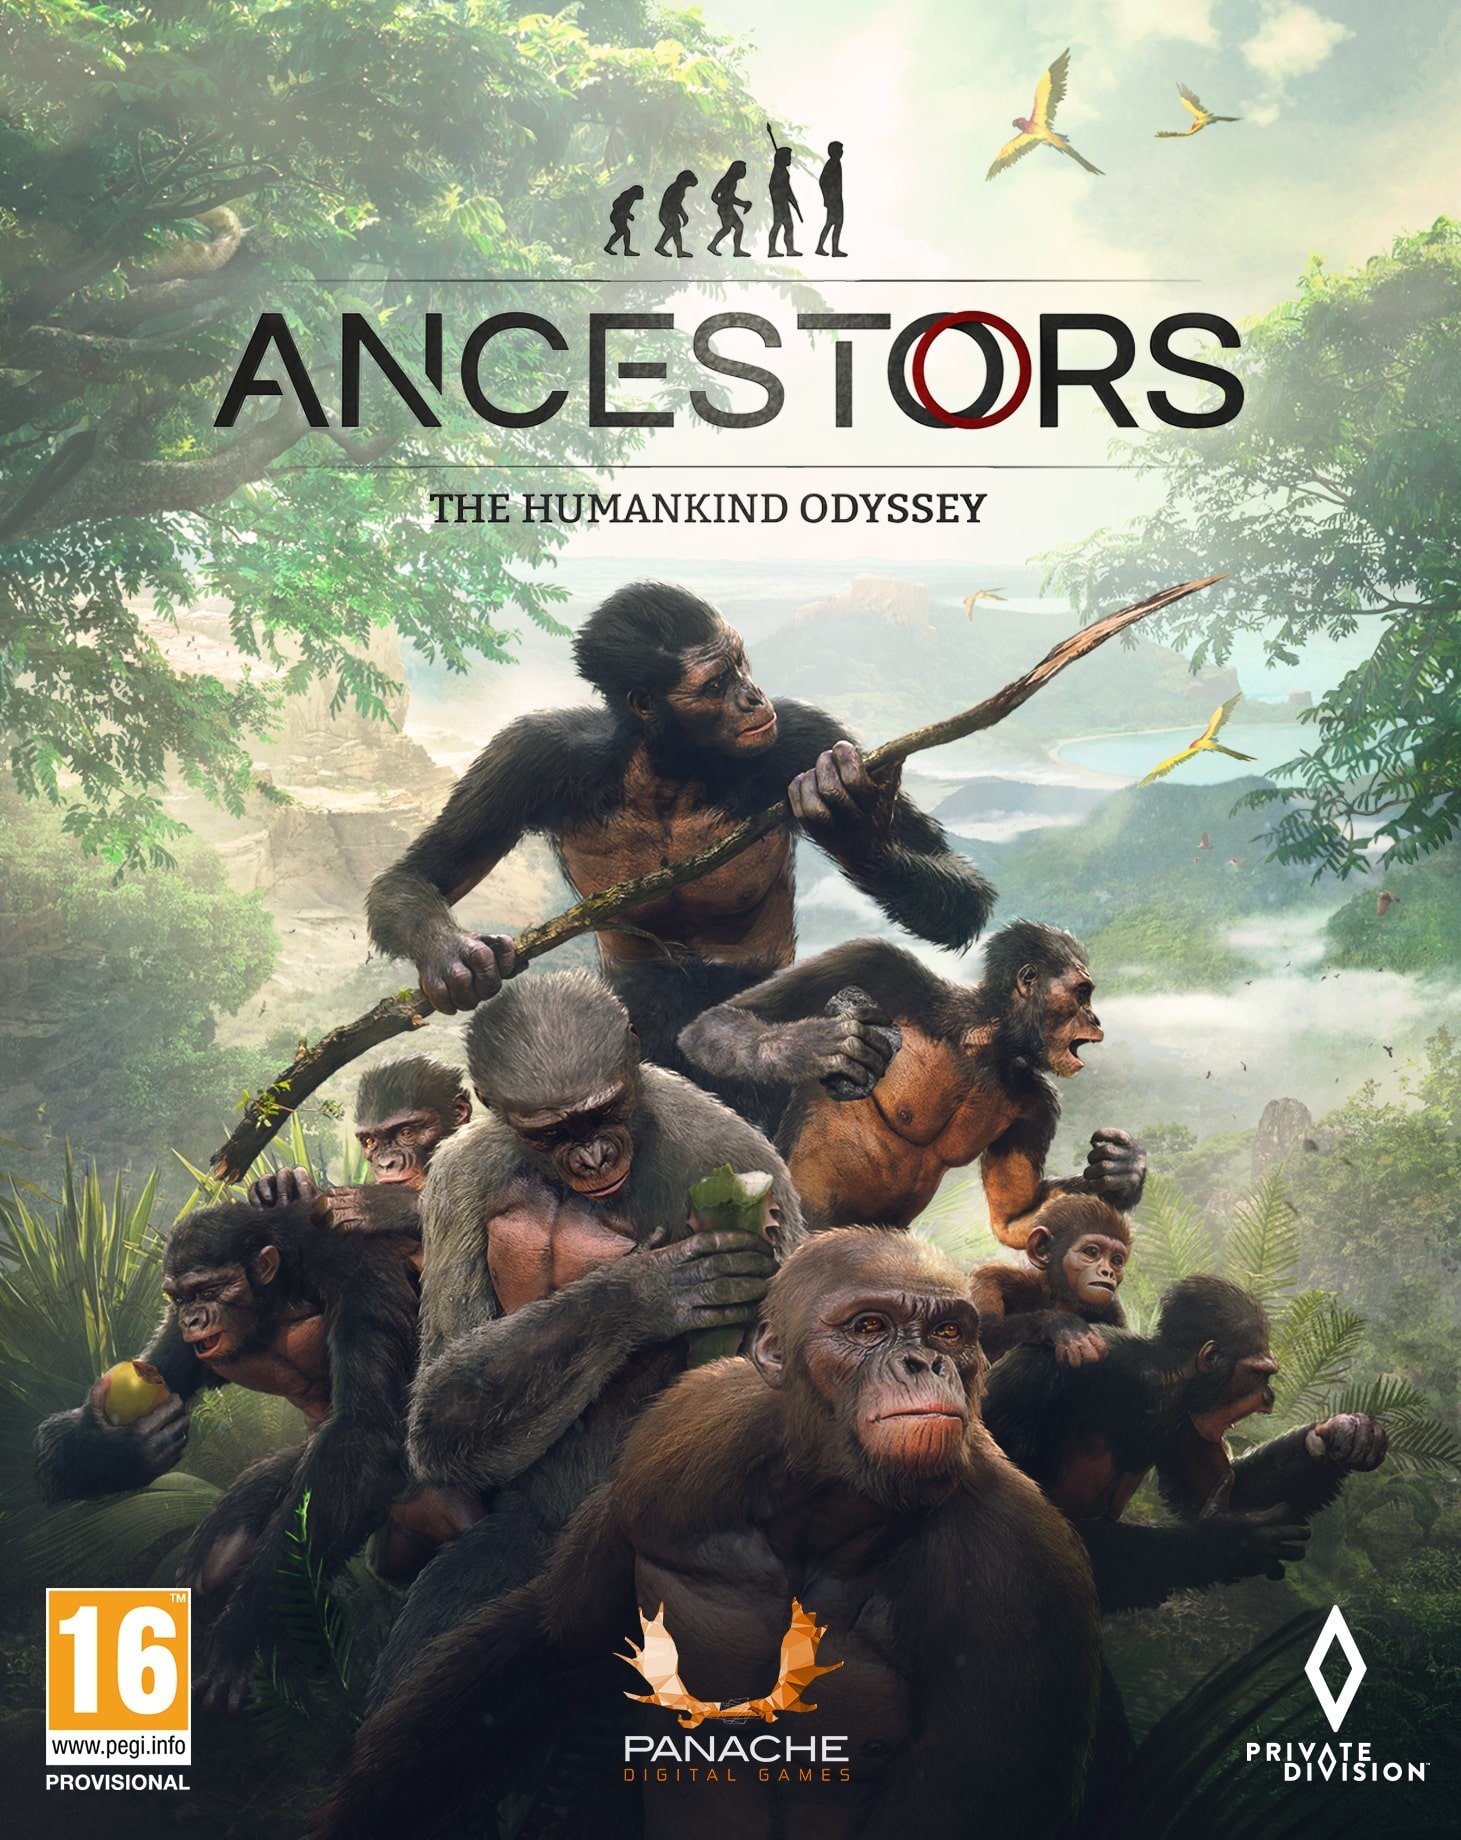 Ancestors: The Humankind Odyssey – PC DIGITAL